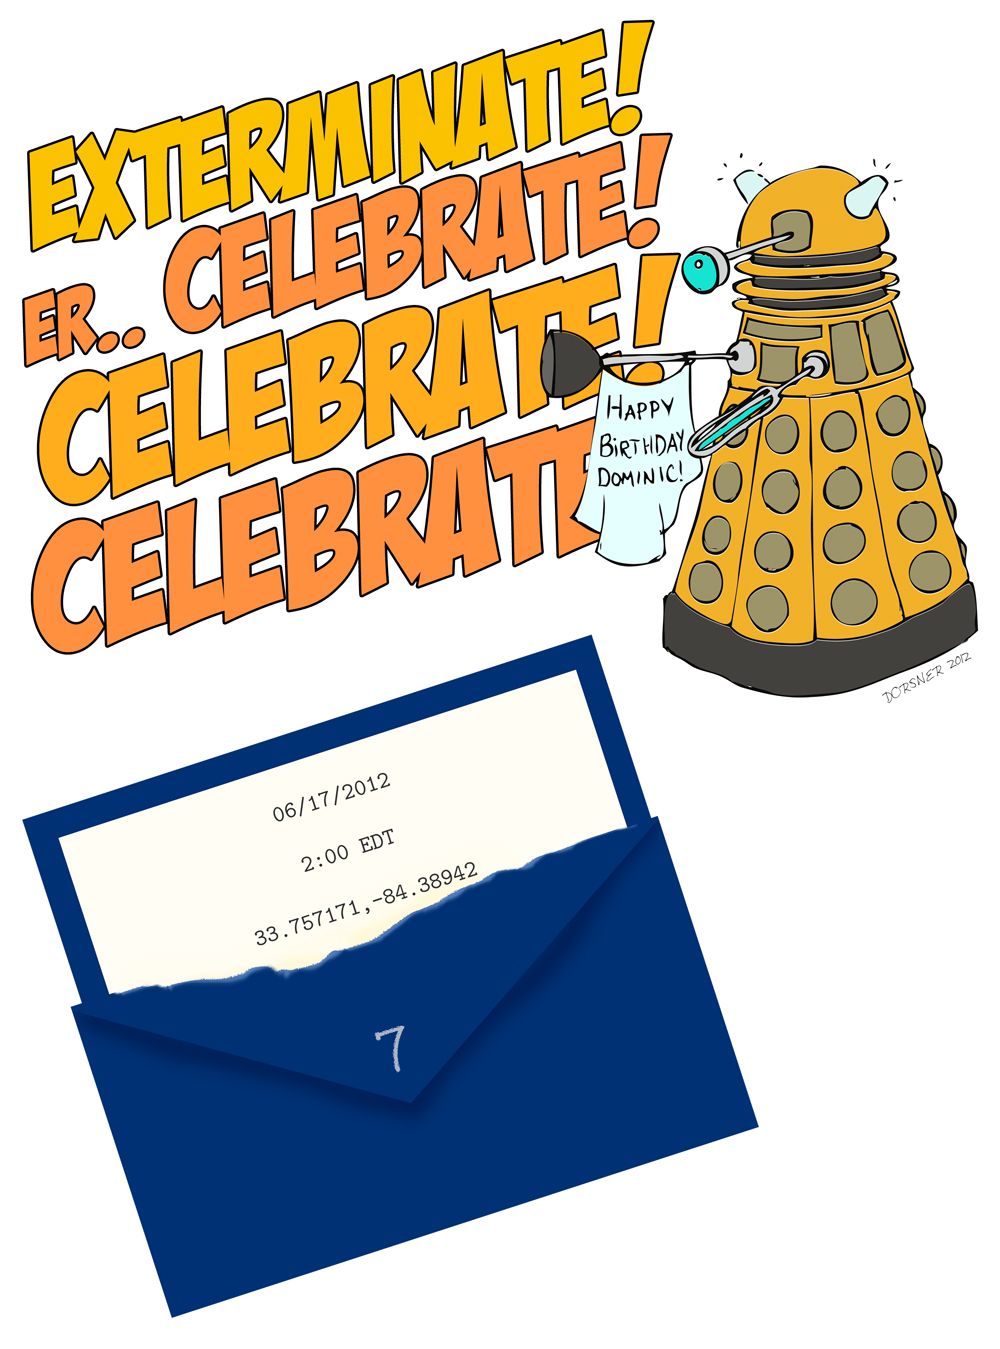 Doctor Who dalek birthday party  invitation -dabbled